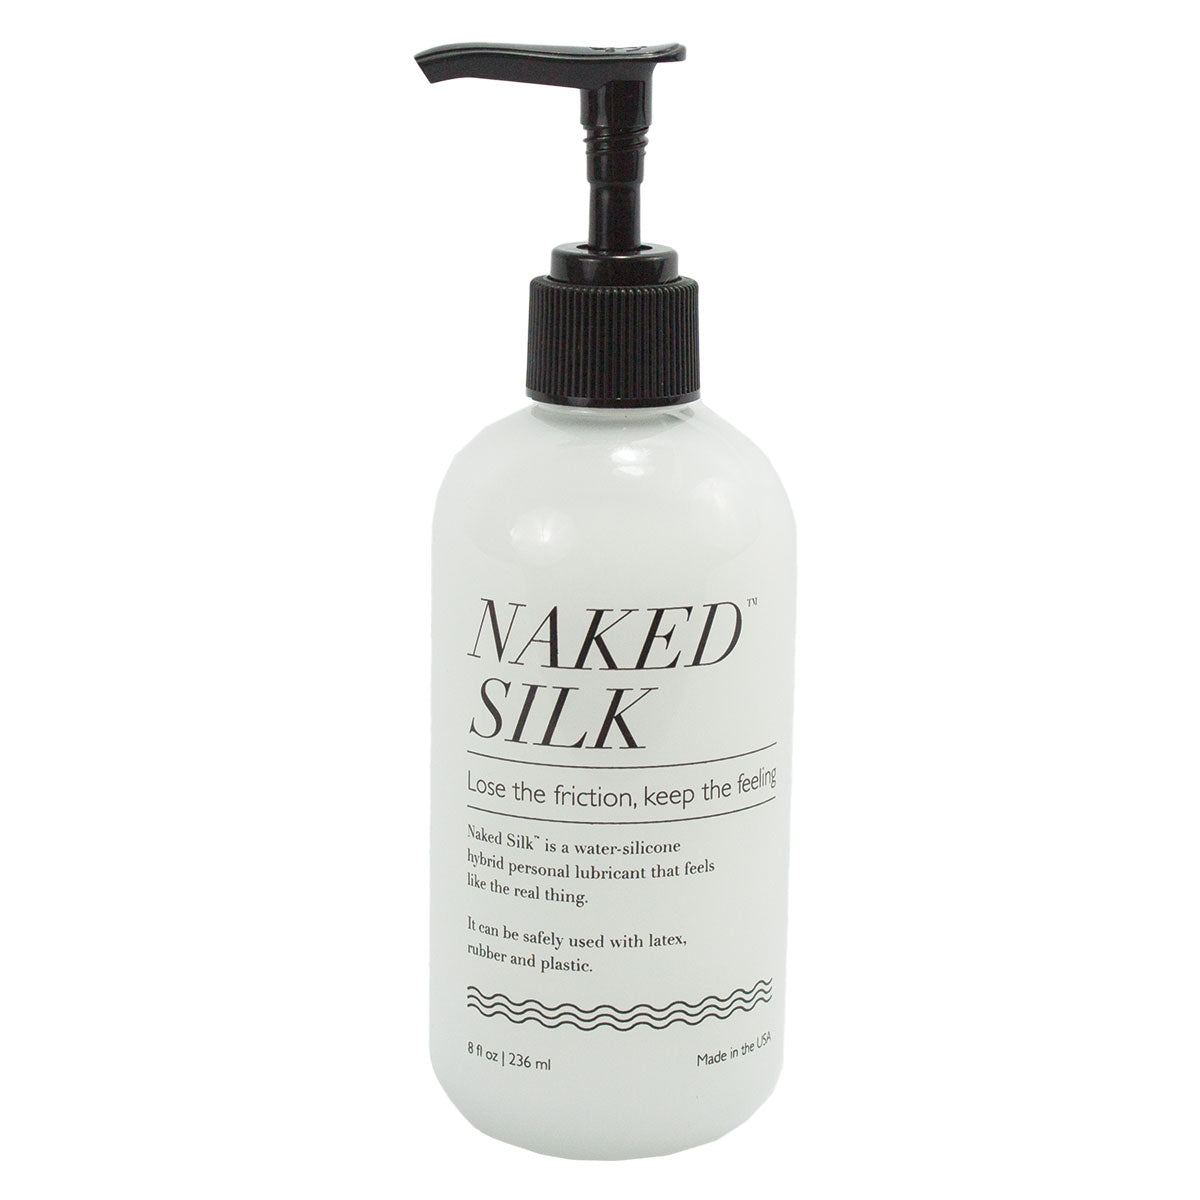 Naked Silk - 8.7oz